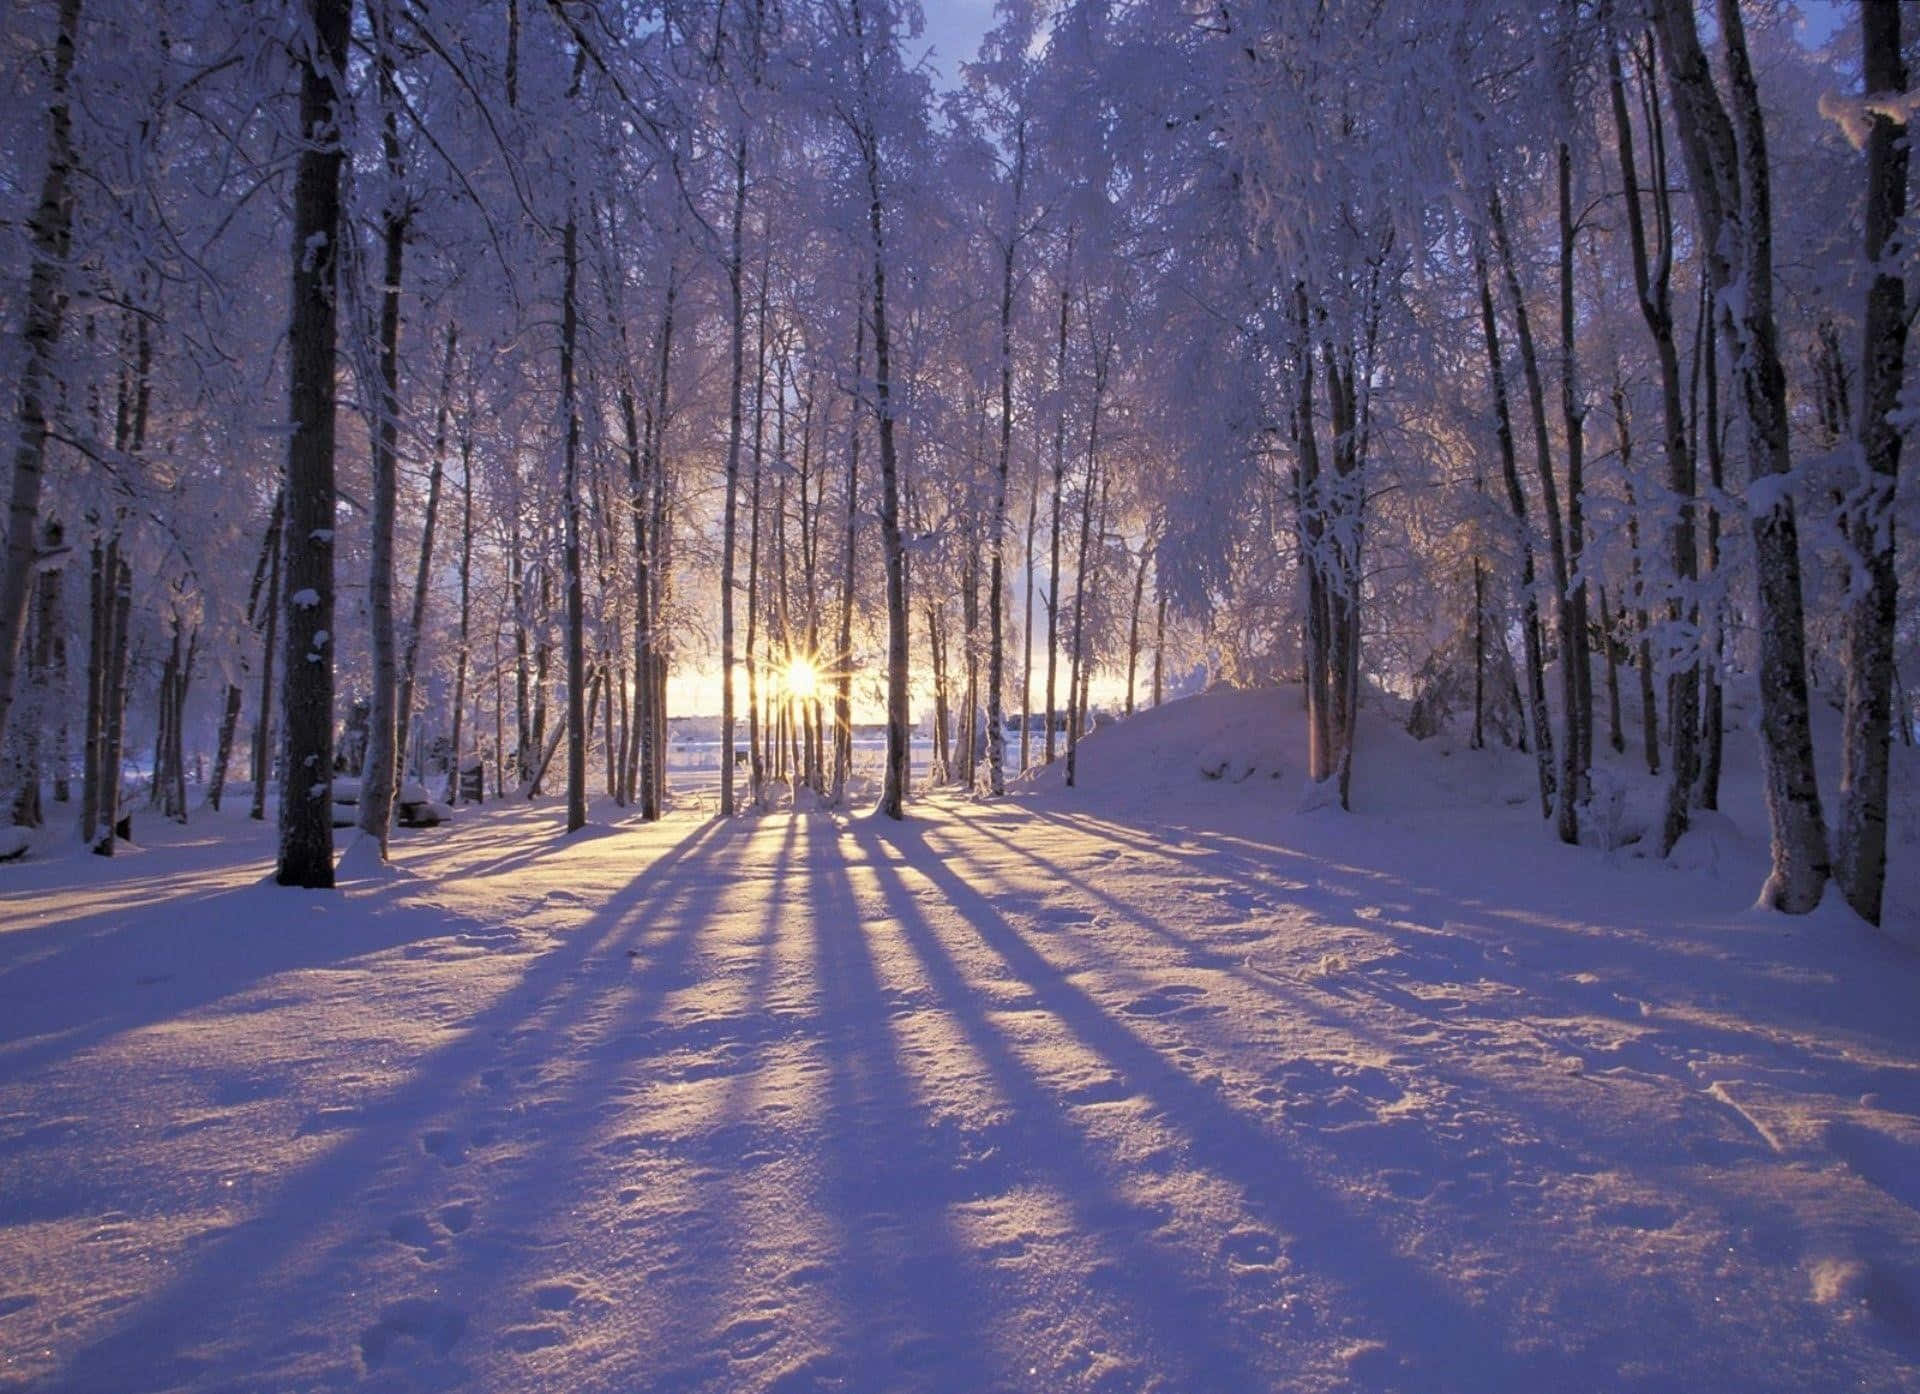 Winter Wonderland - Snowy Landscape & Frozen Trees Background